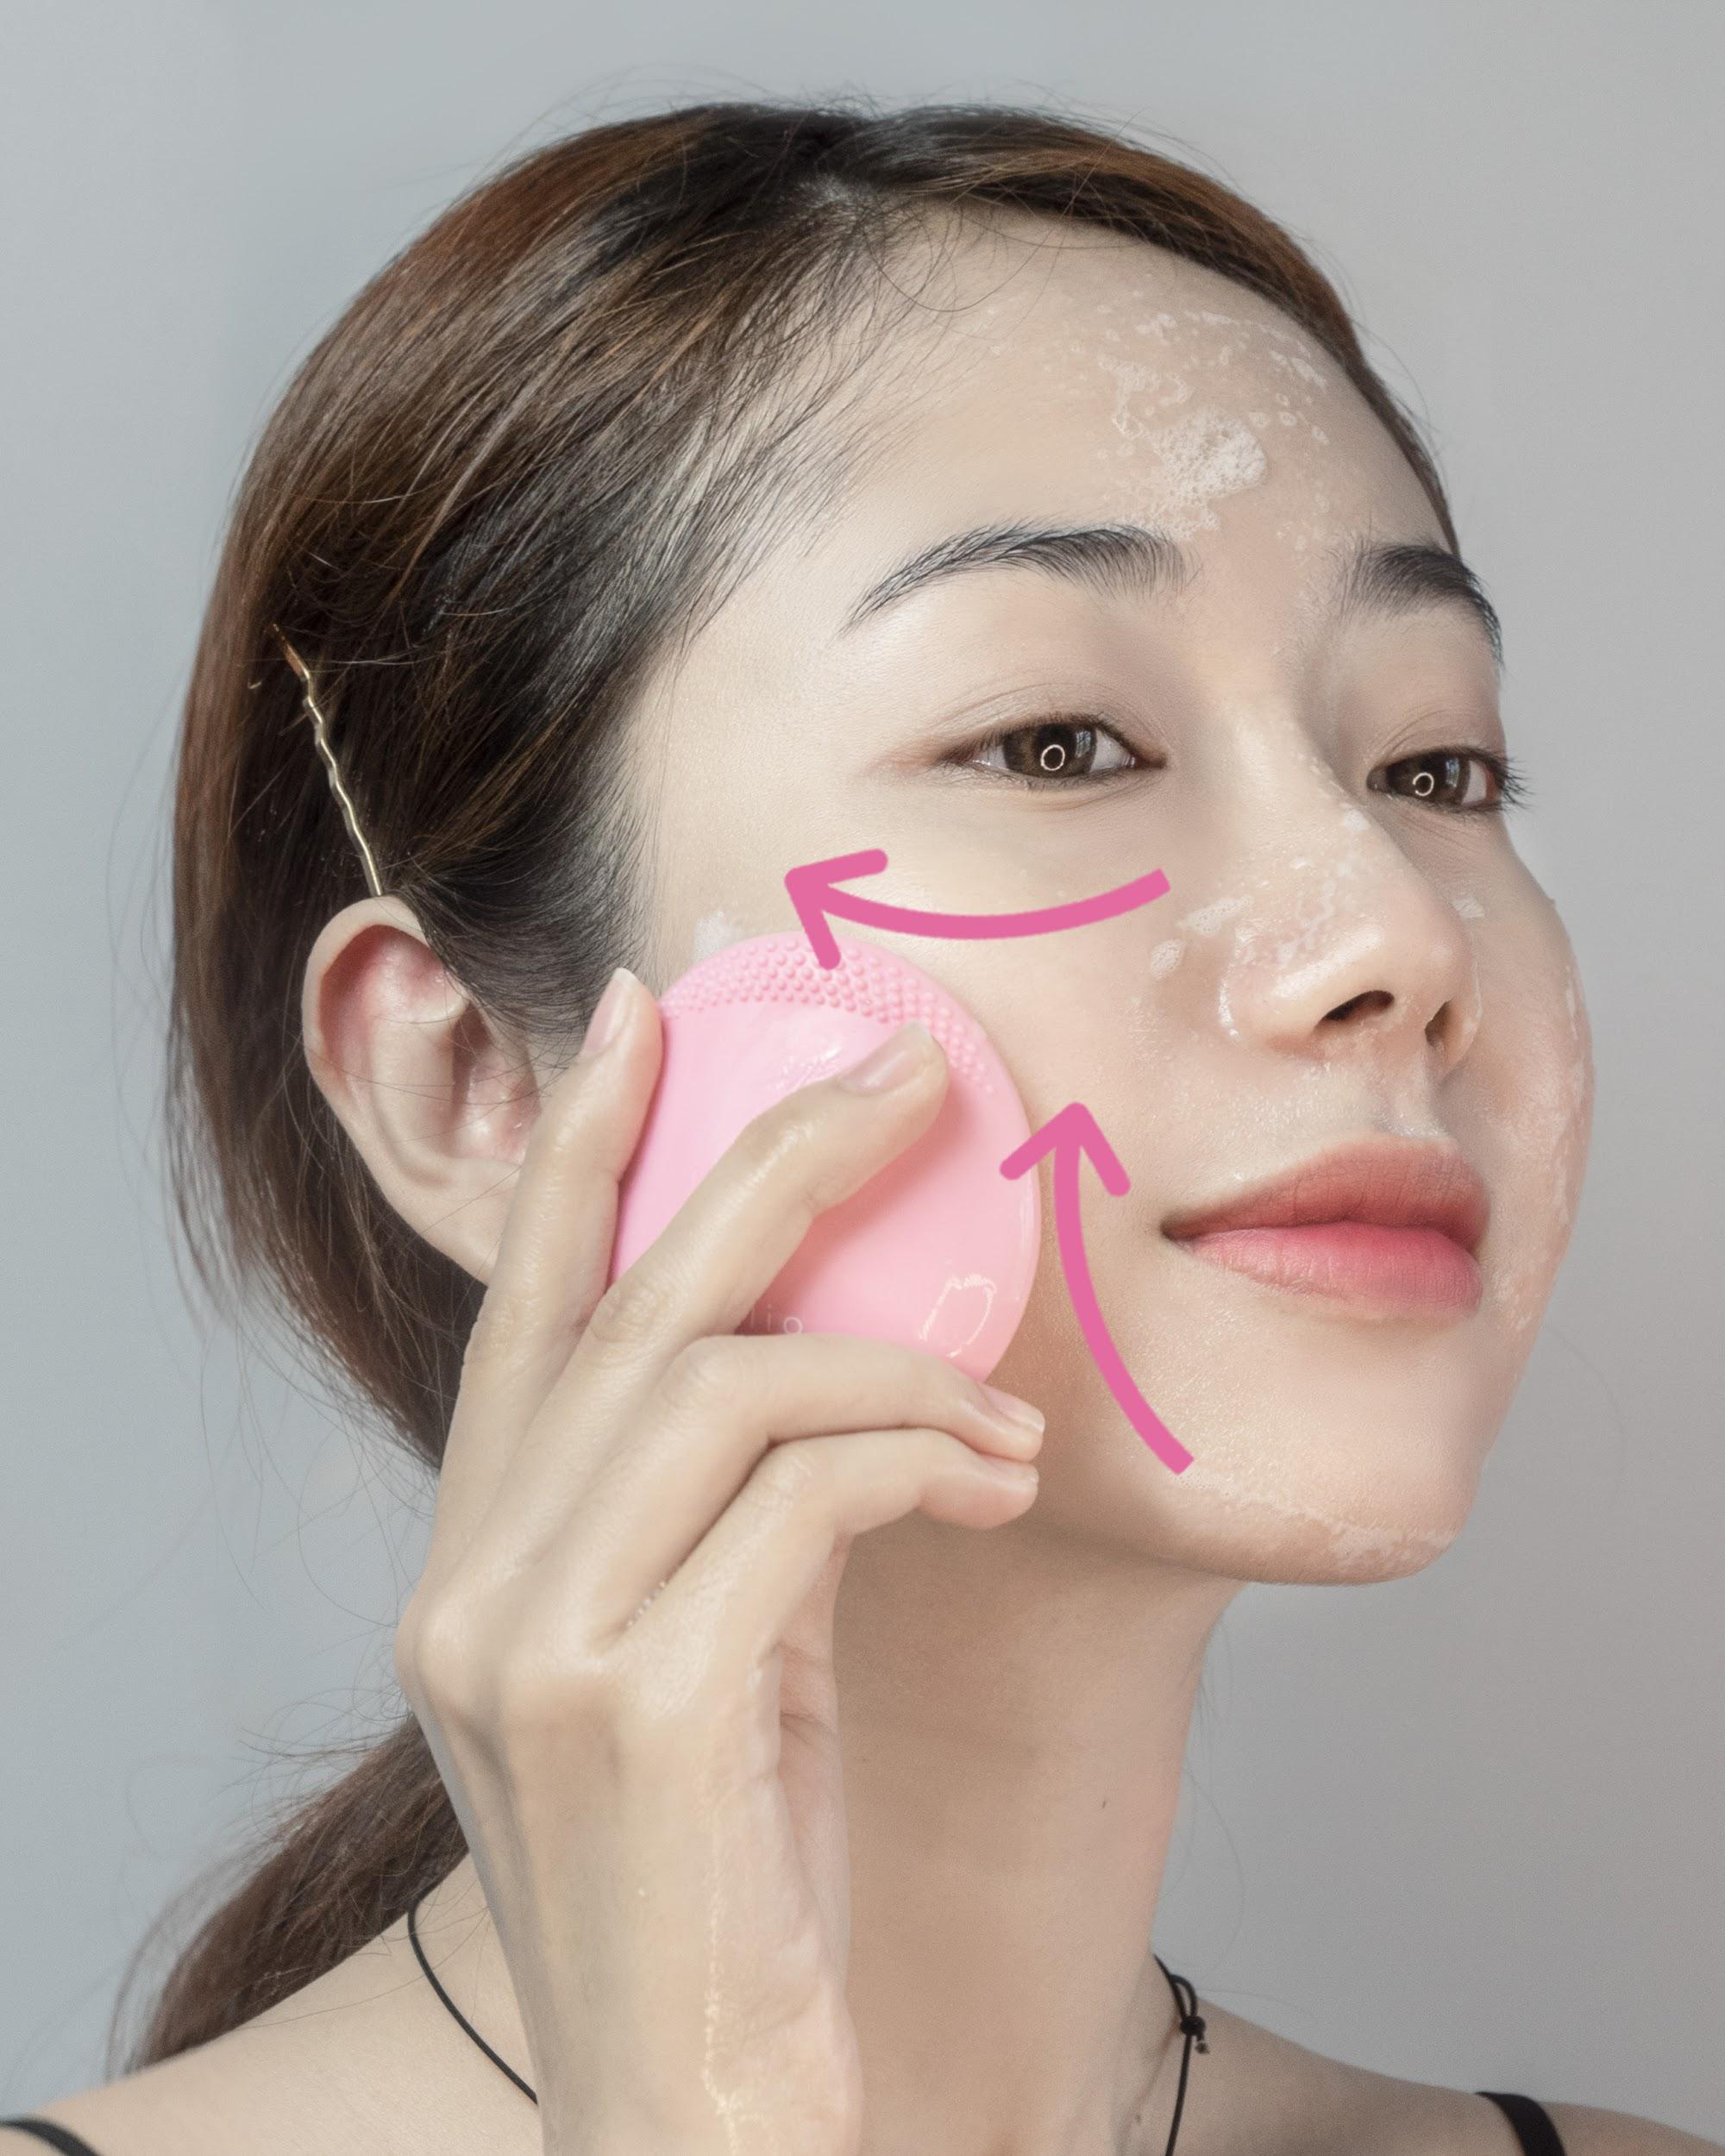 Halio Sensitive Facial Cleansing & Massaging có tốt không?